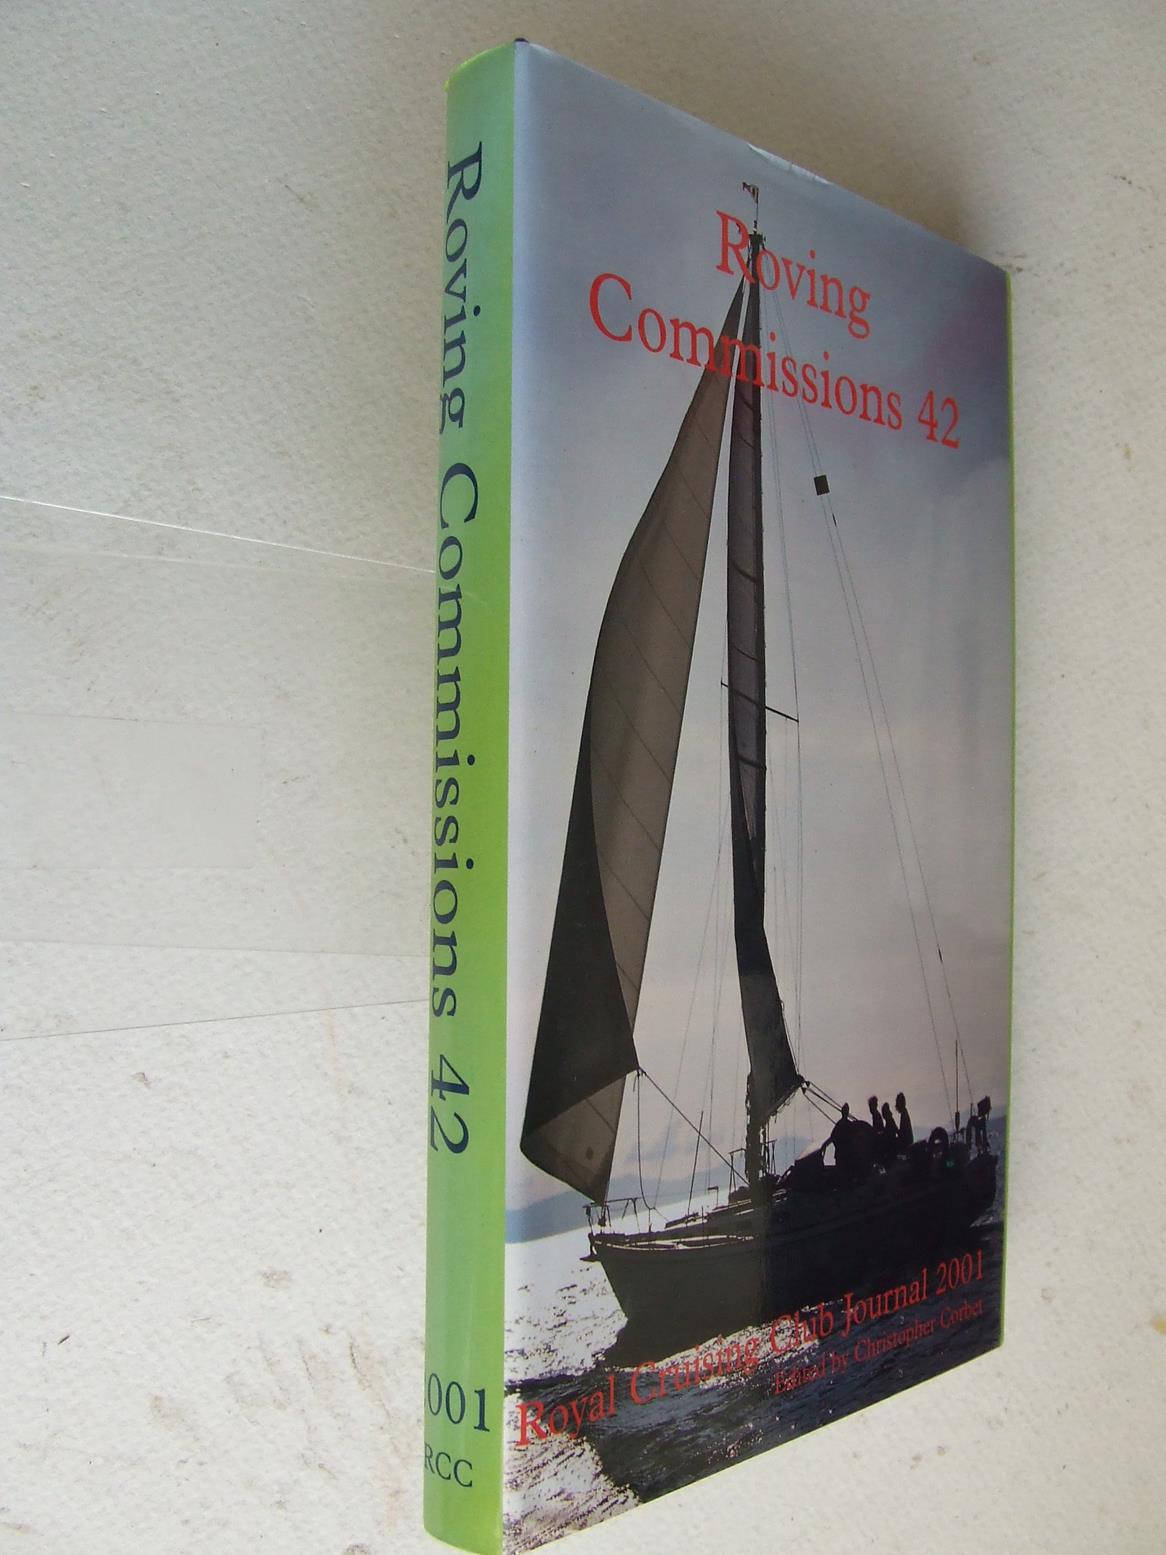 Roving Commissions 42 / Royal Cruising Club Journal 2001